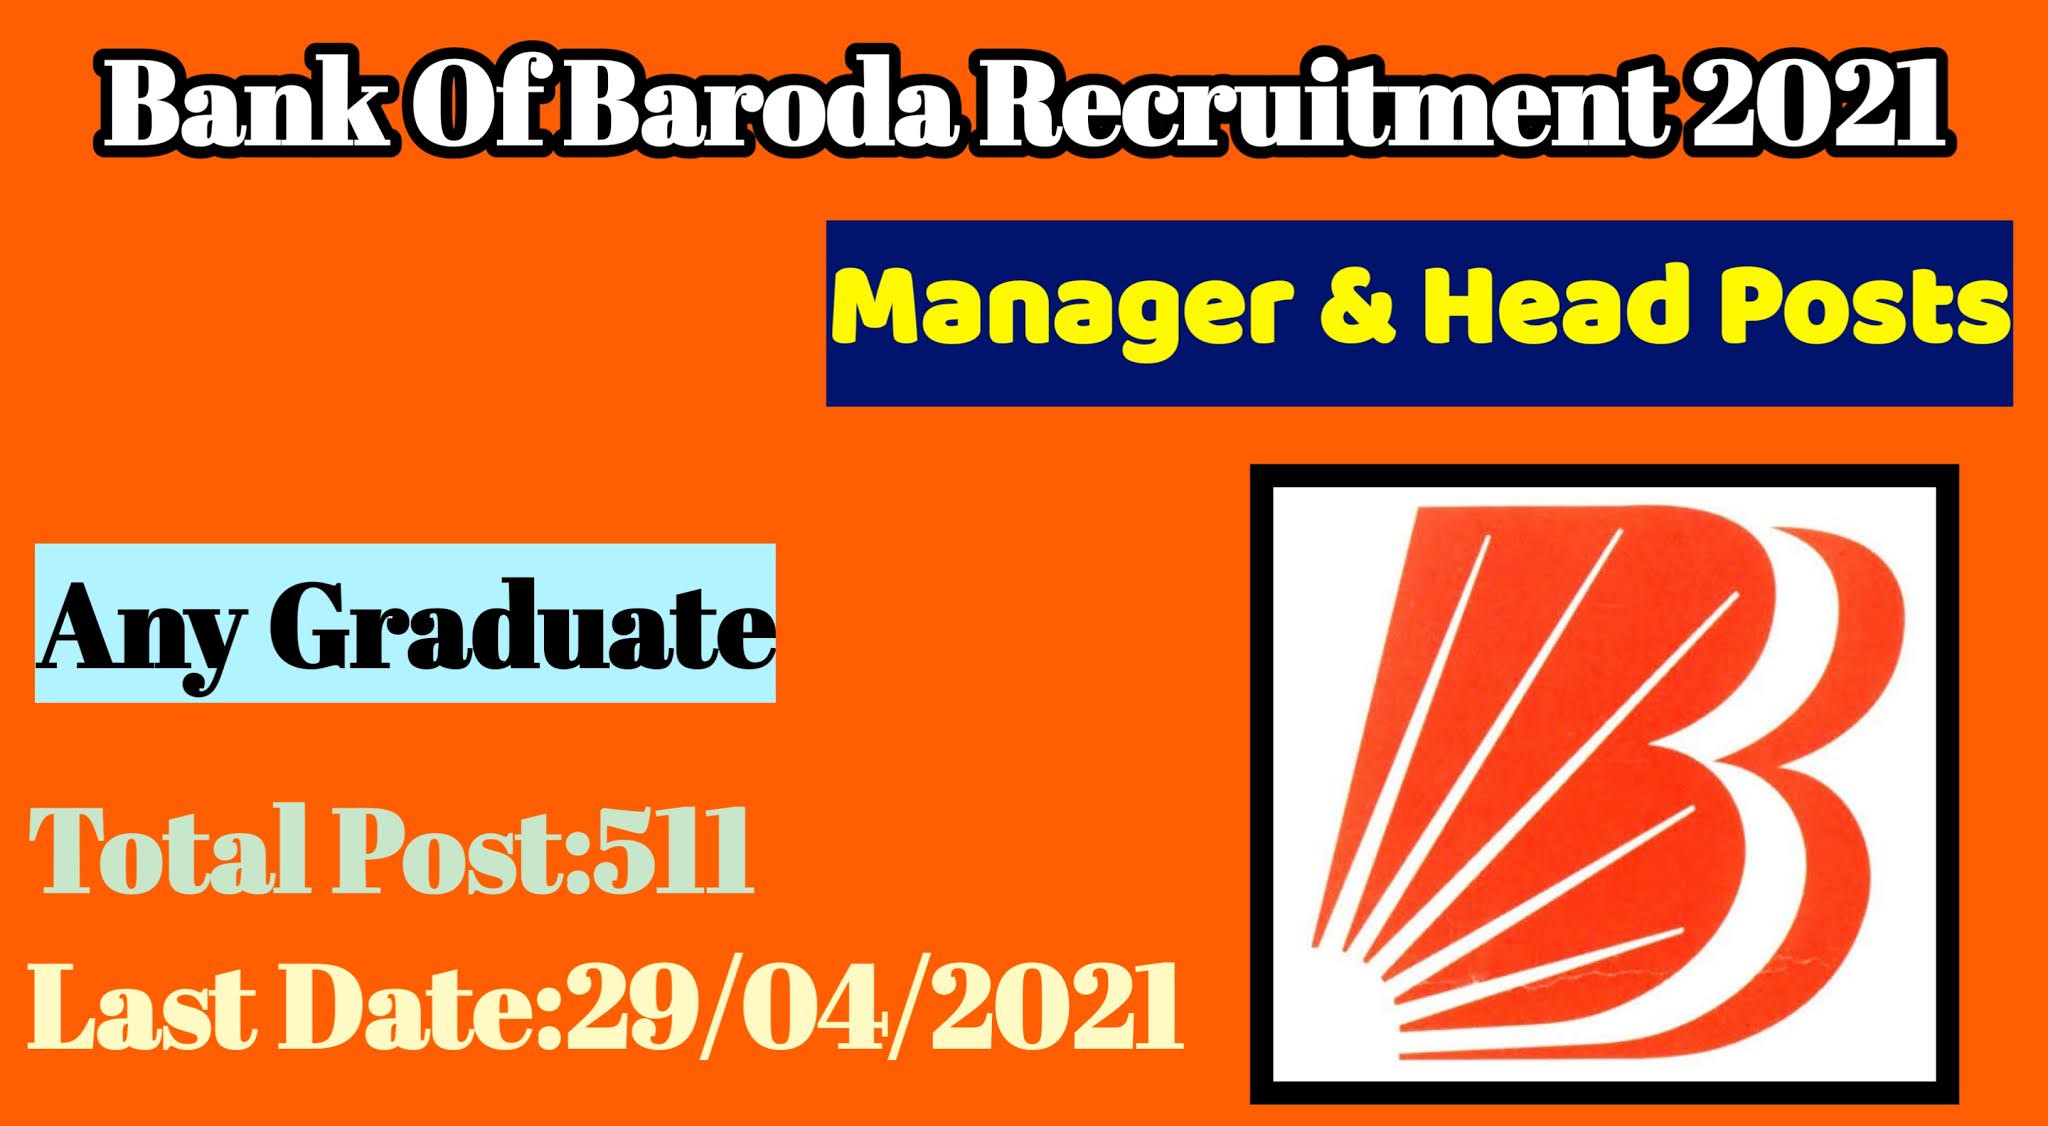 Bank of baroda recruitment 2021,bob recruitment 2021,bank of baroda recruitment apply online,bob vacancy 2021,bob jobs,bank of baroda recruitment pdf